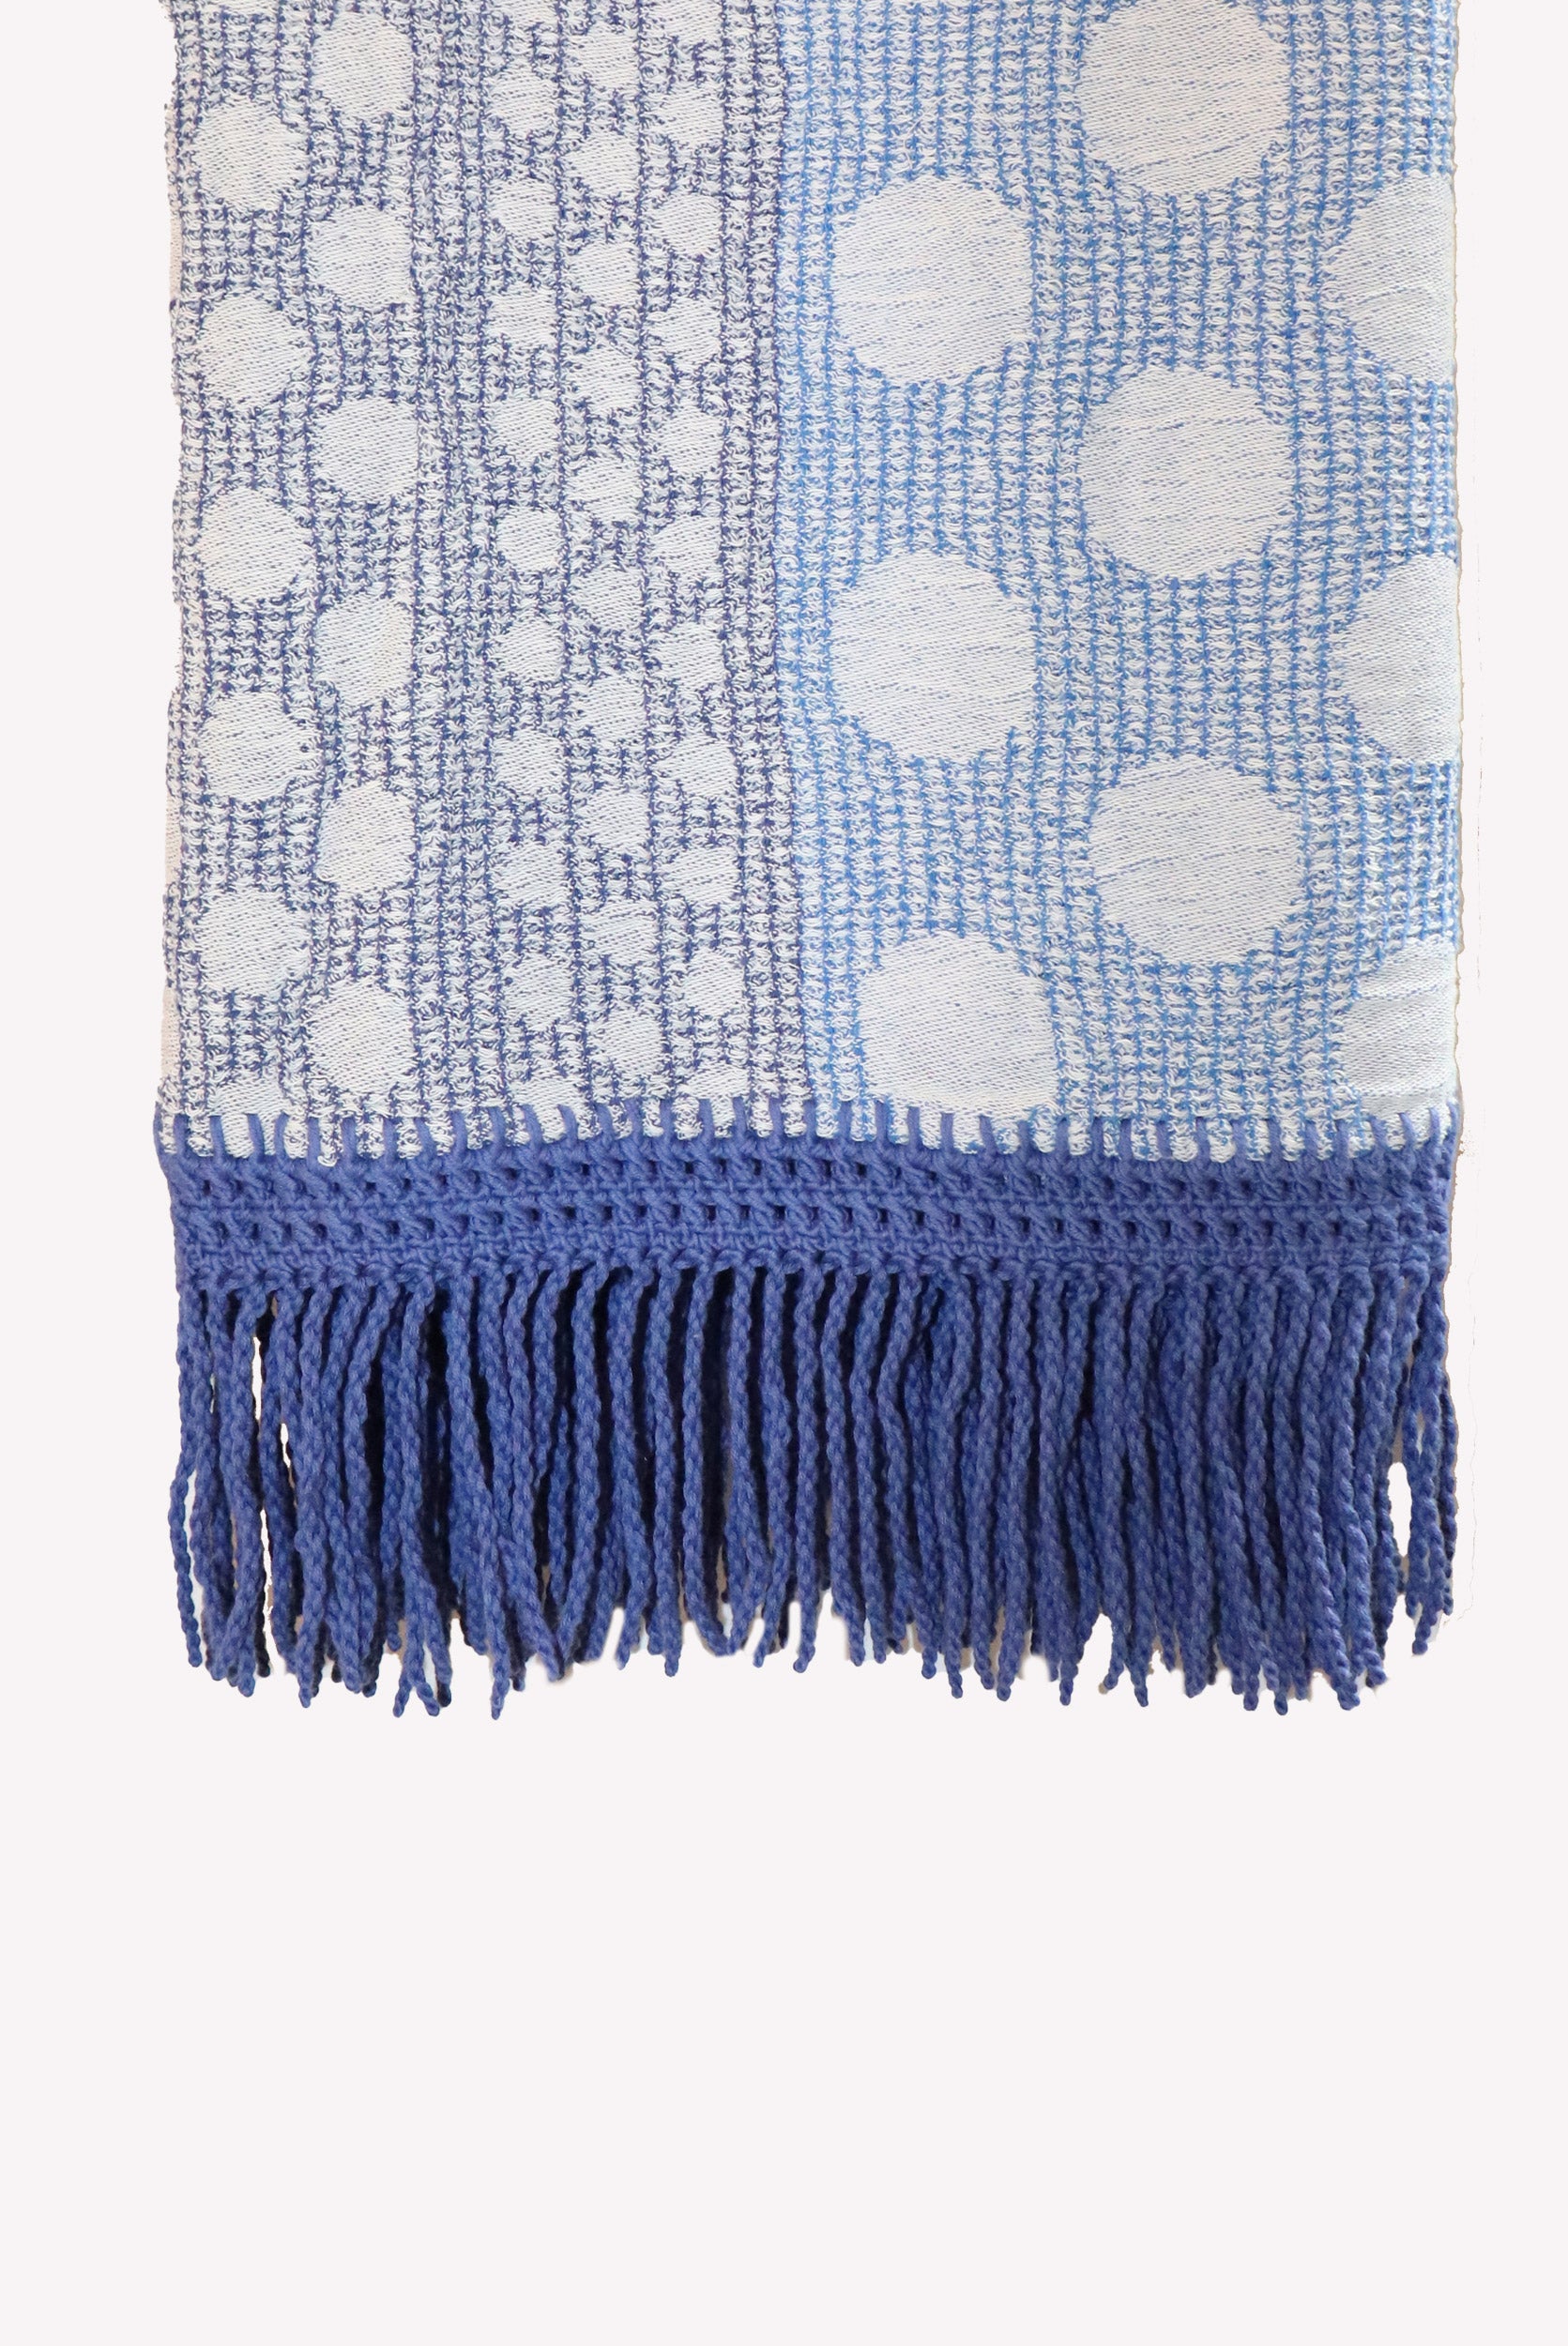 Shell Beach Towel - Blue